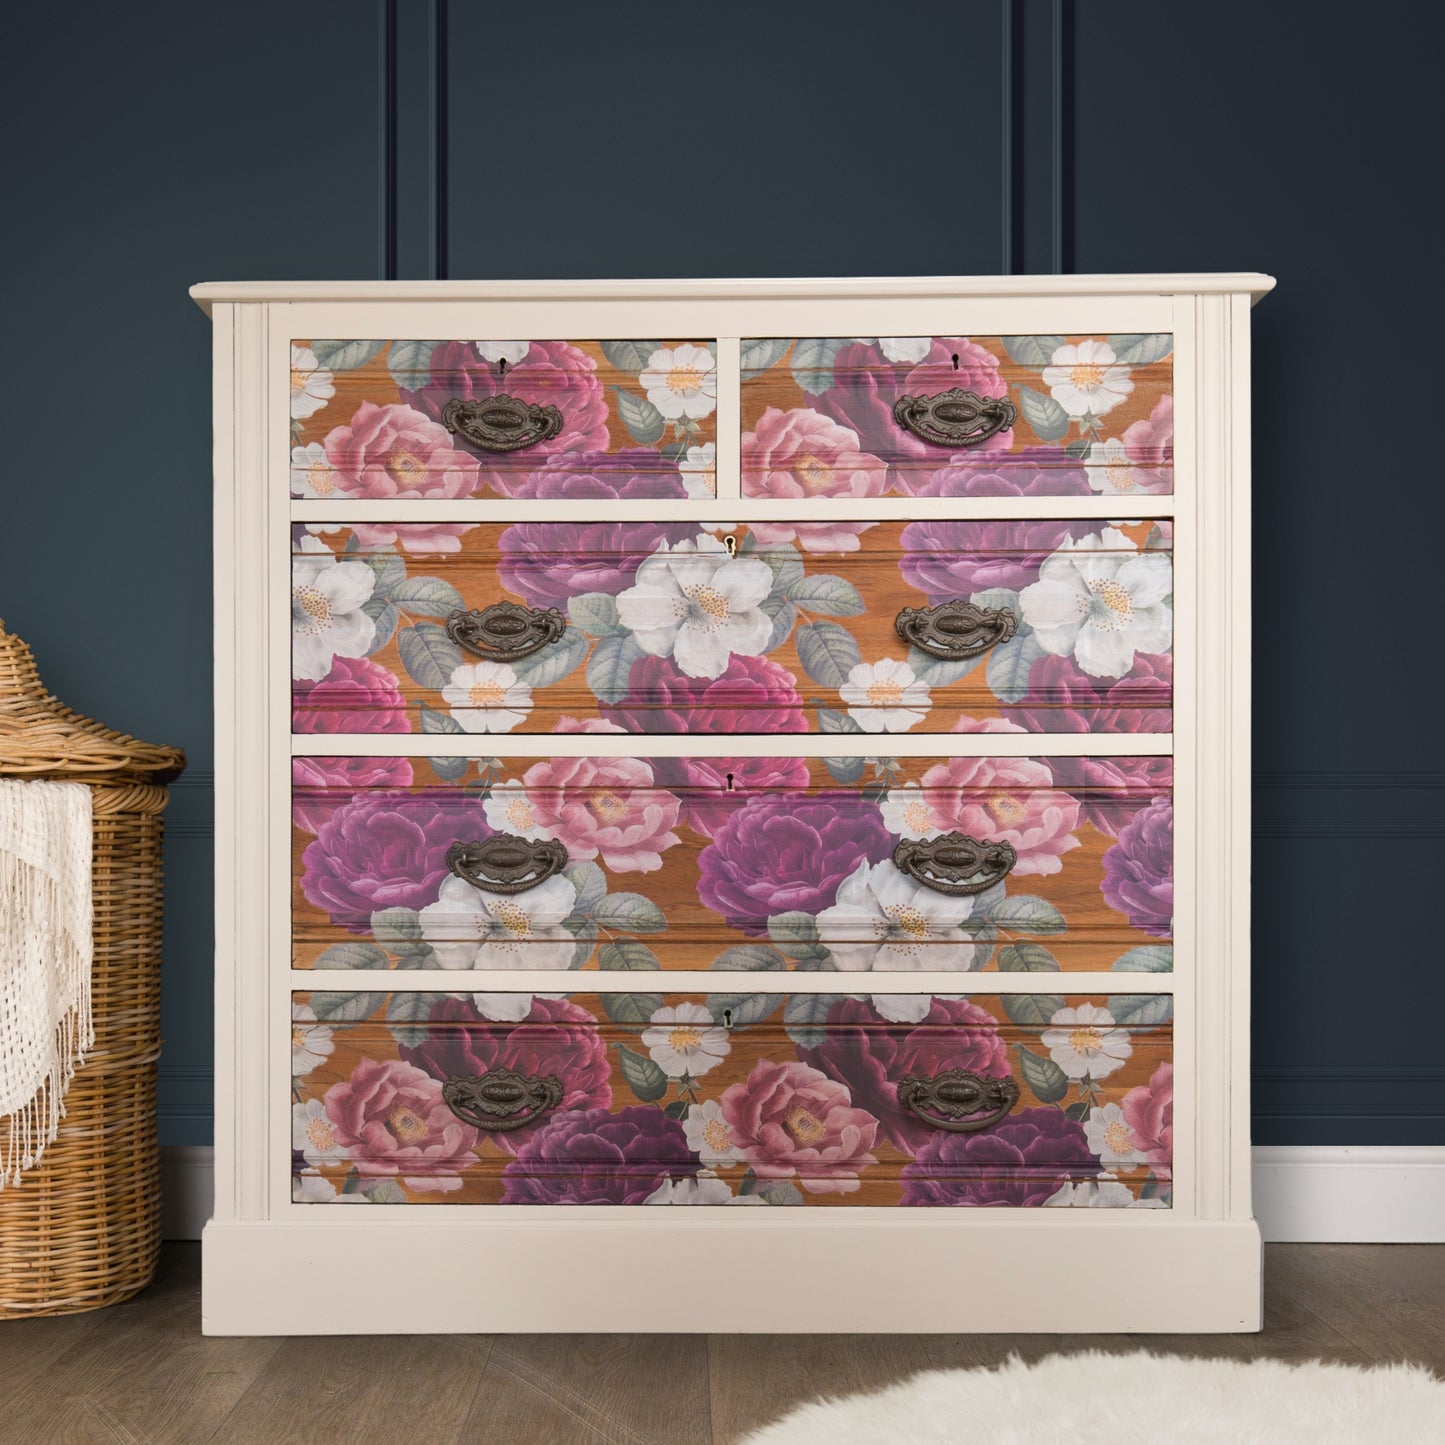 Vintage Aqua Lebus Oak Chest of Drawers, pink, purple floral drawer sides